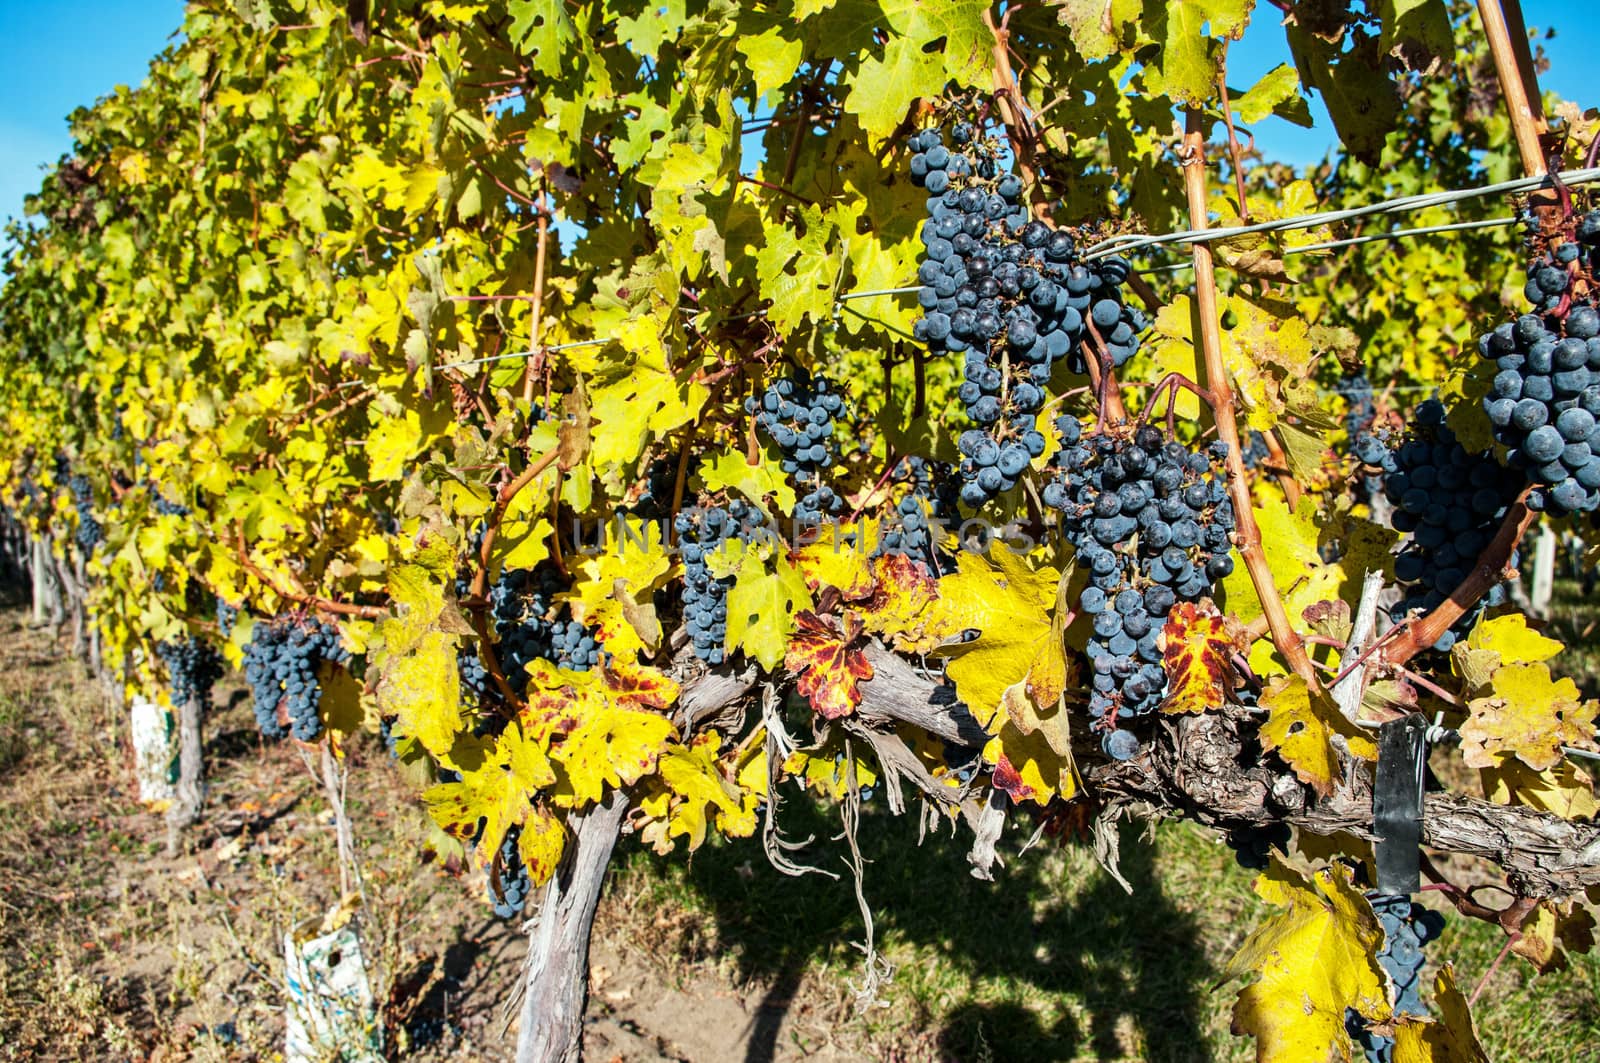 Grape vines in a vineyard  by edcorey